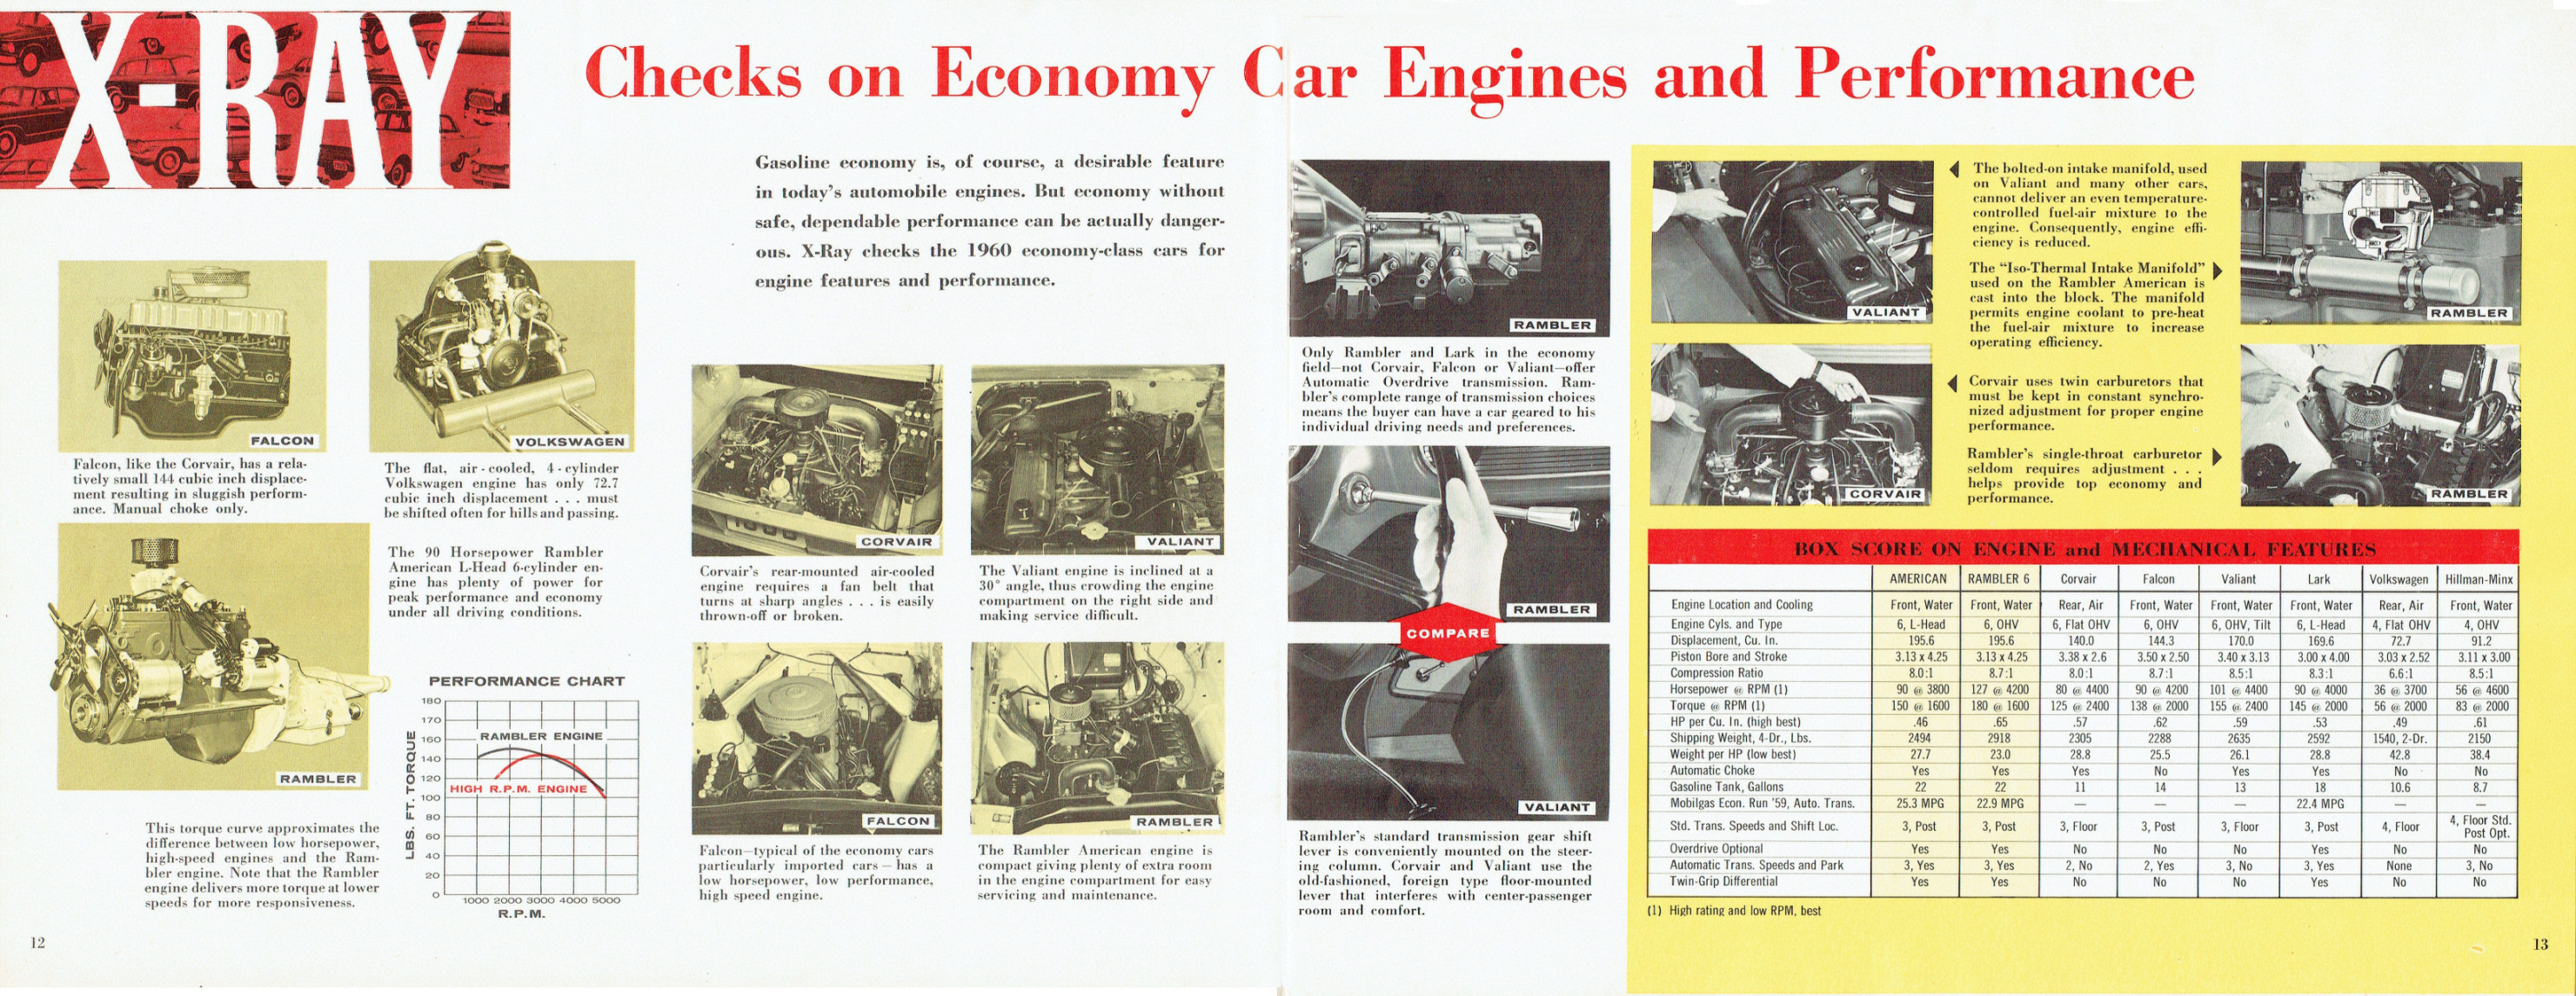 1960_X-Ray_AMC_Economy_Cars-12-13